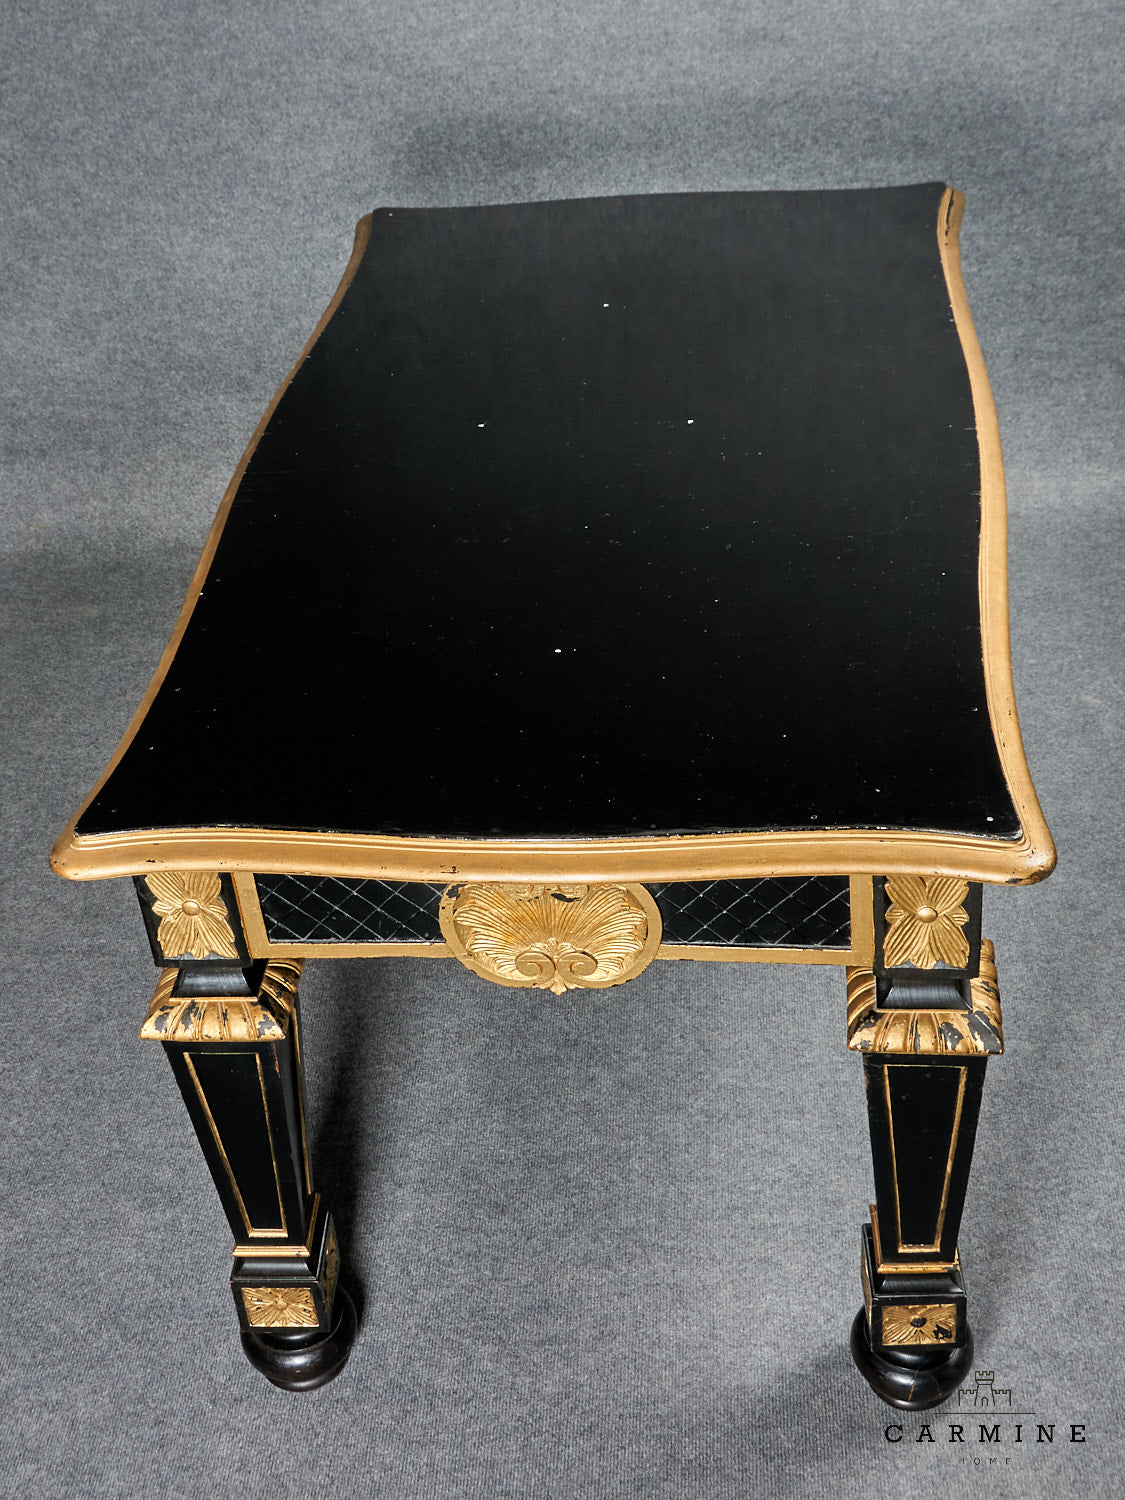 Napoleon III table, France around 1880